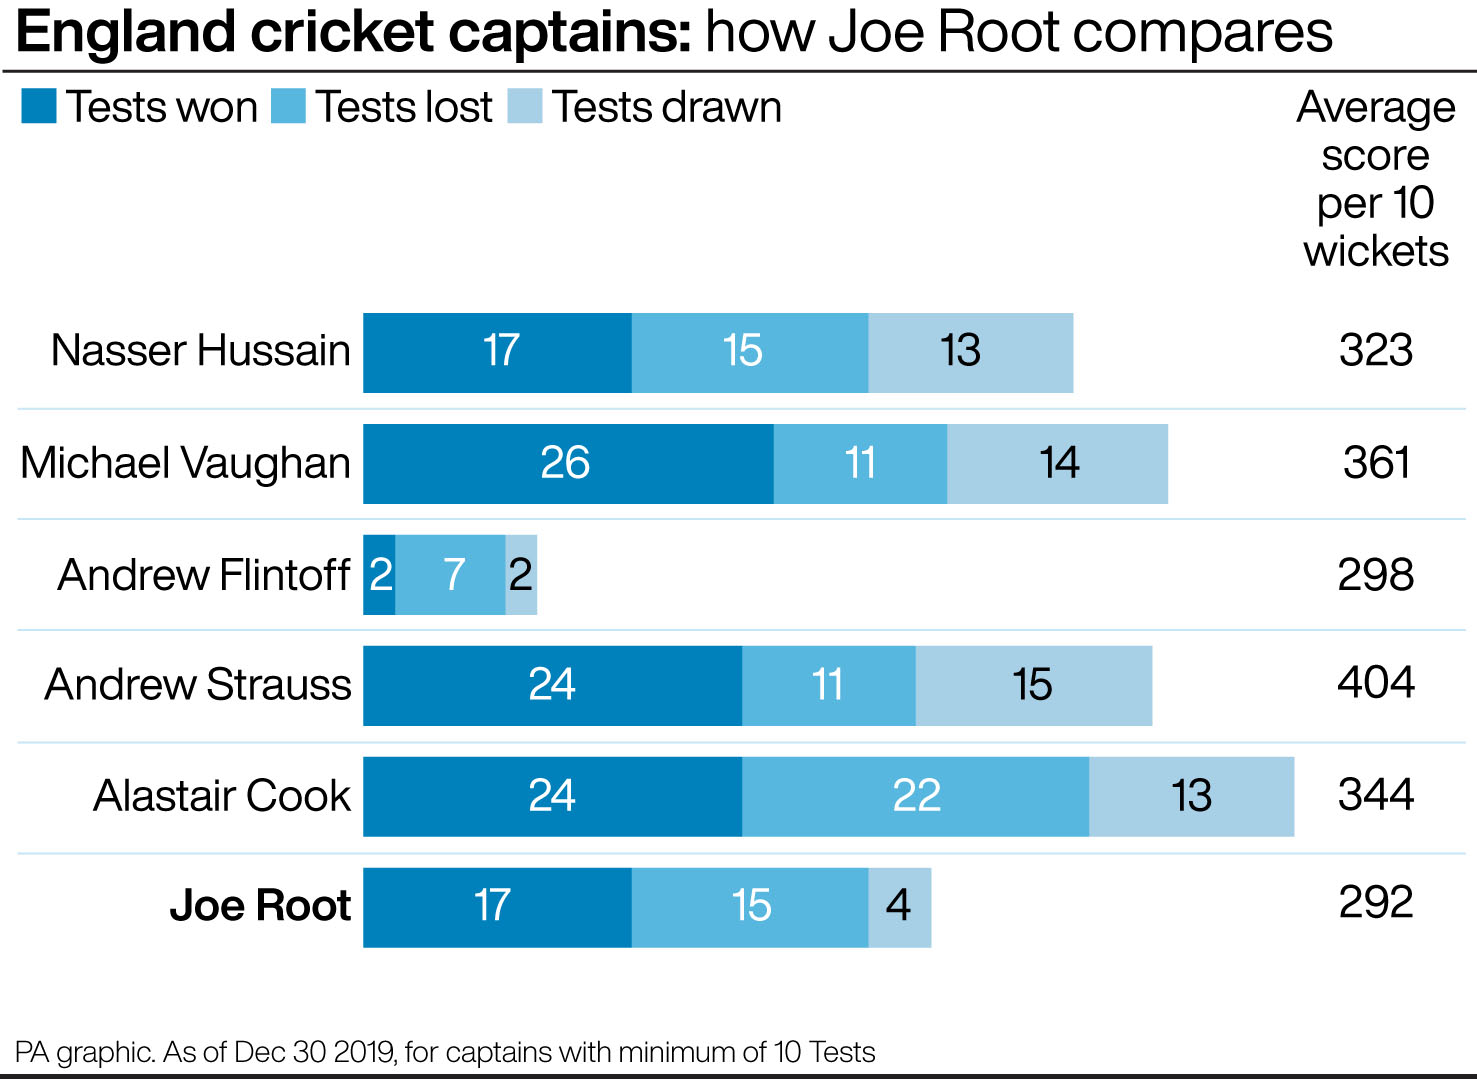 England captains: how Joe Root compares